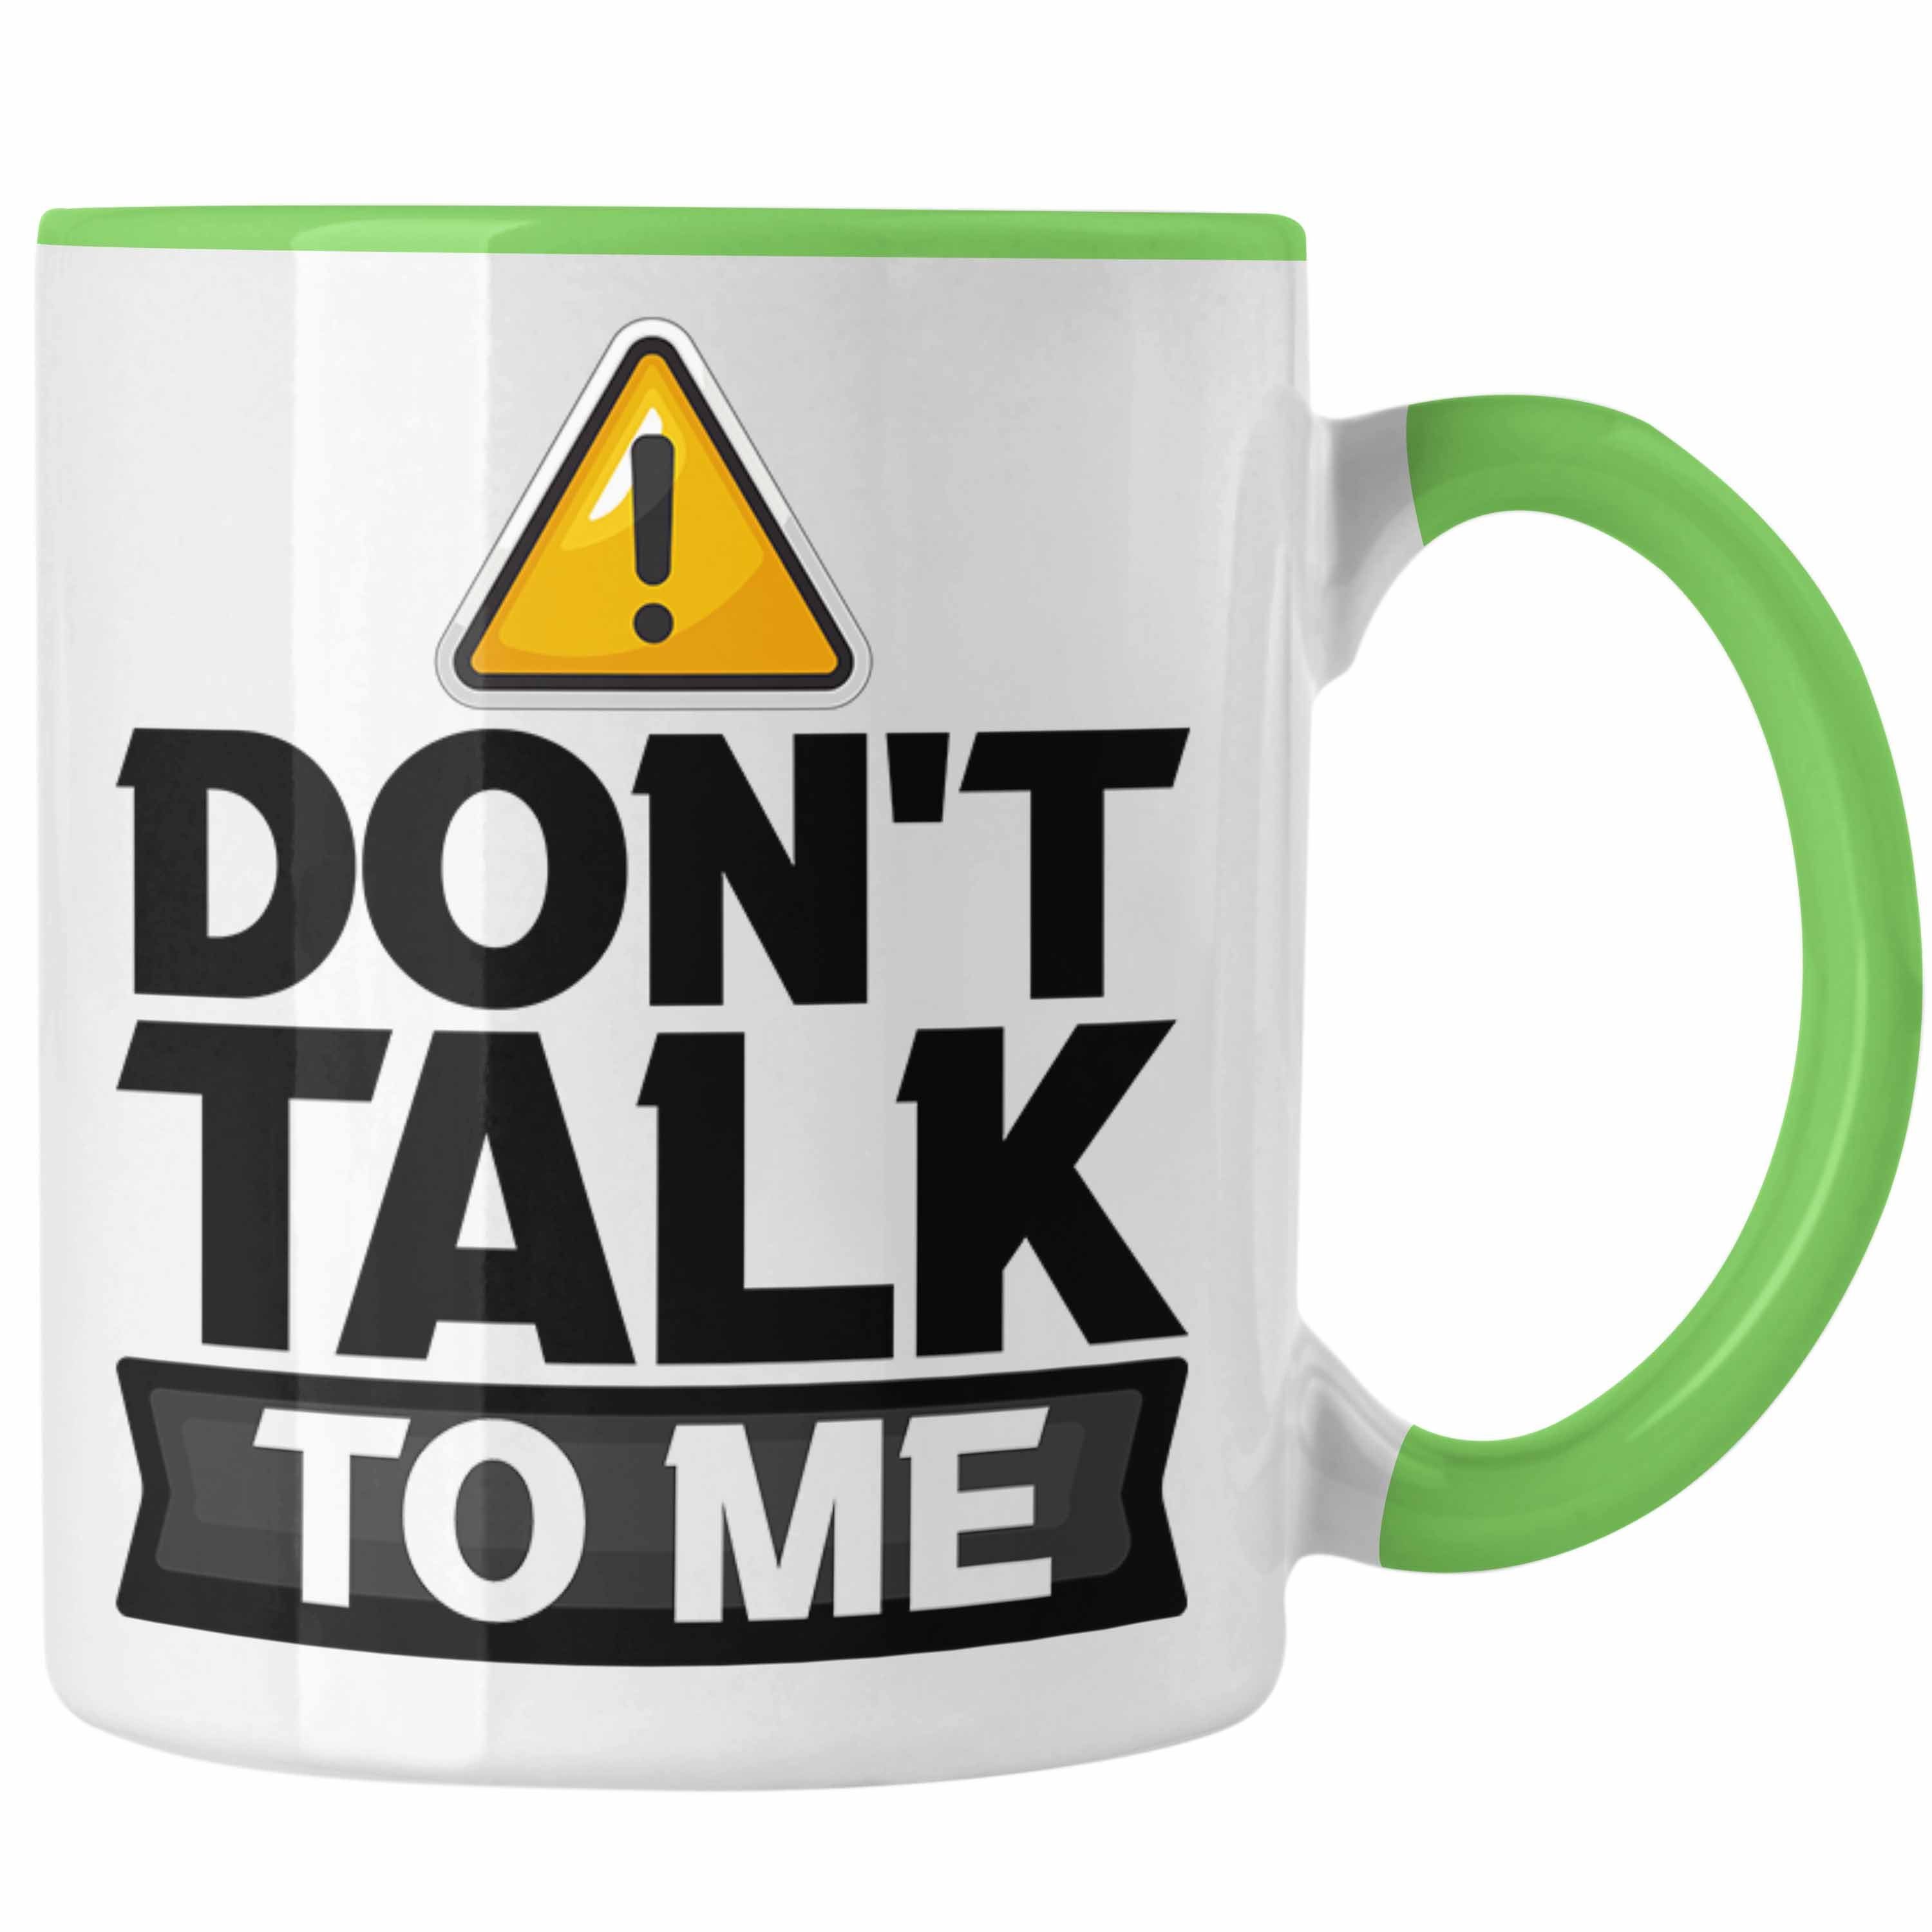 Trendation Tasse Dont Talk To Me Tasse Geschenk Schlechte Laune Kaffee-Becher Büro-Allt Grün